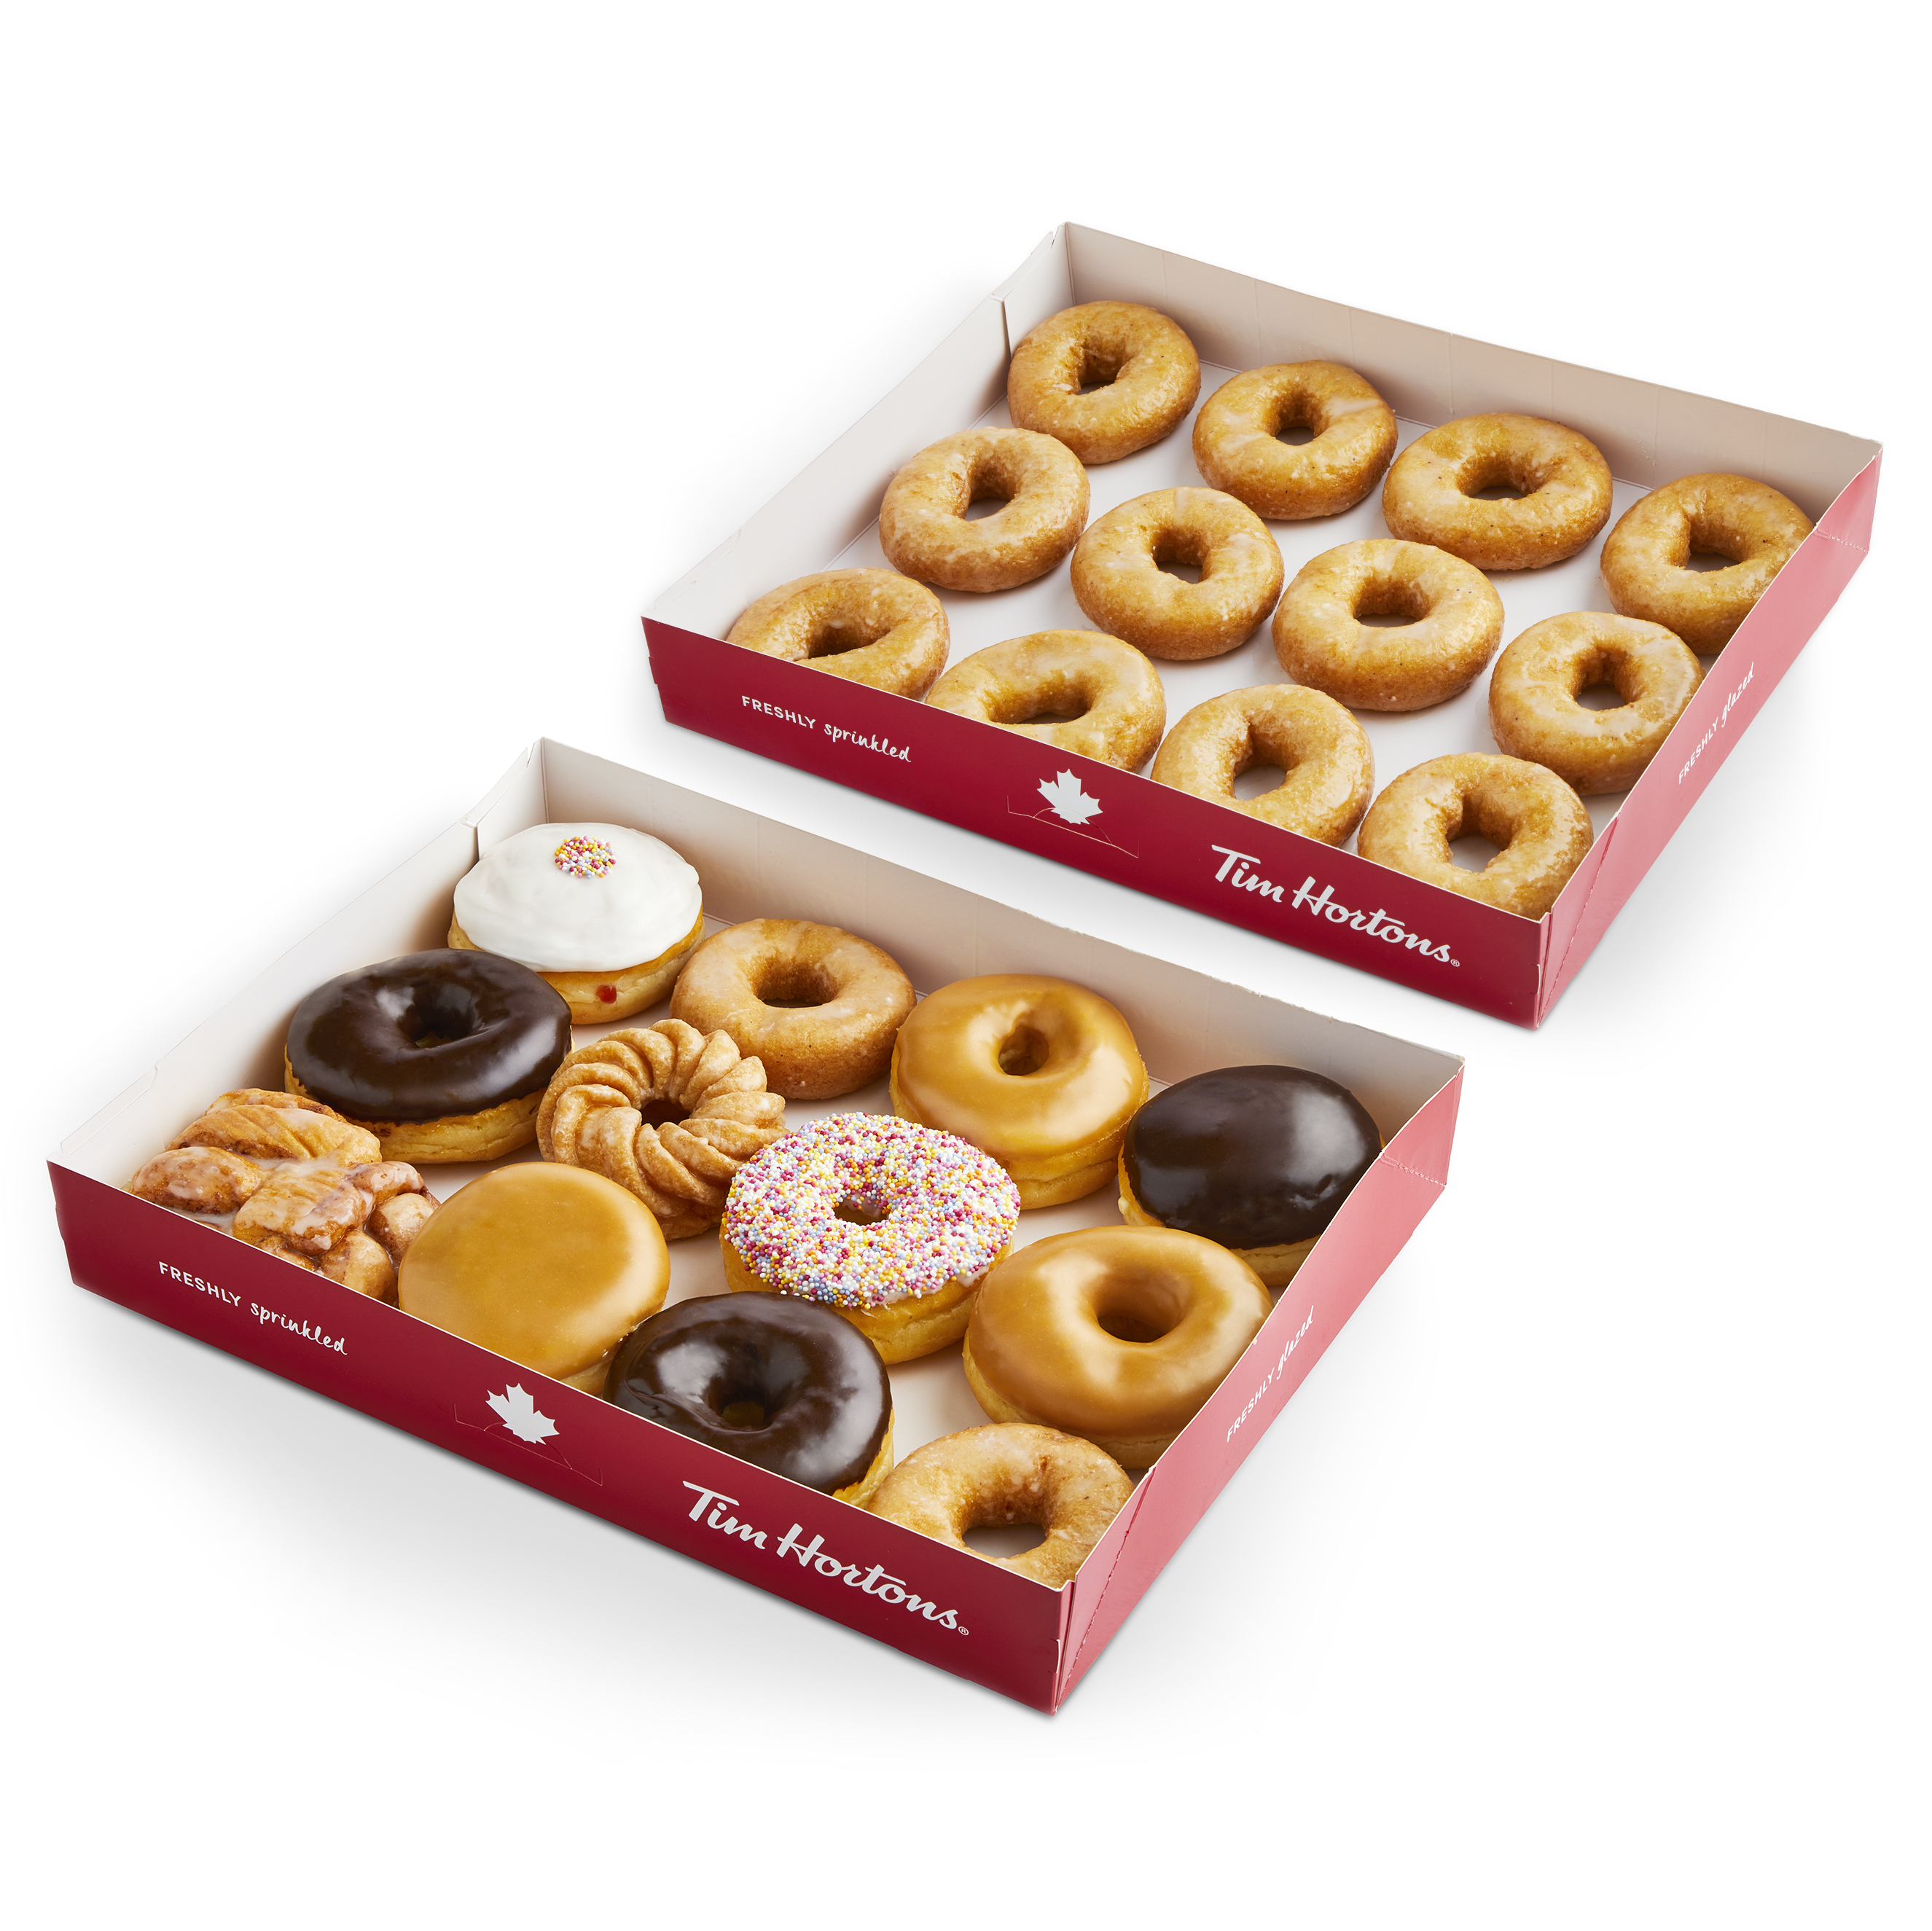 Dozen Assorted Donuts Plus Dozen Old Fashioned Glazed Donuts